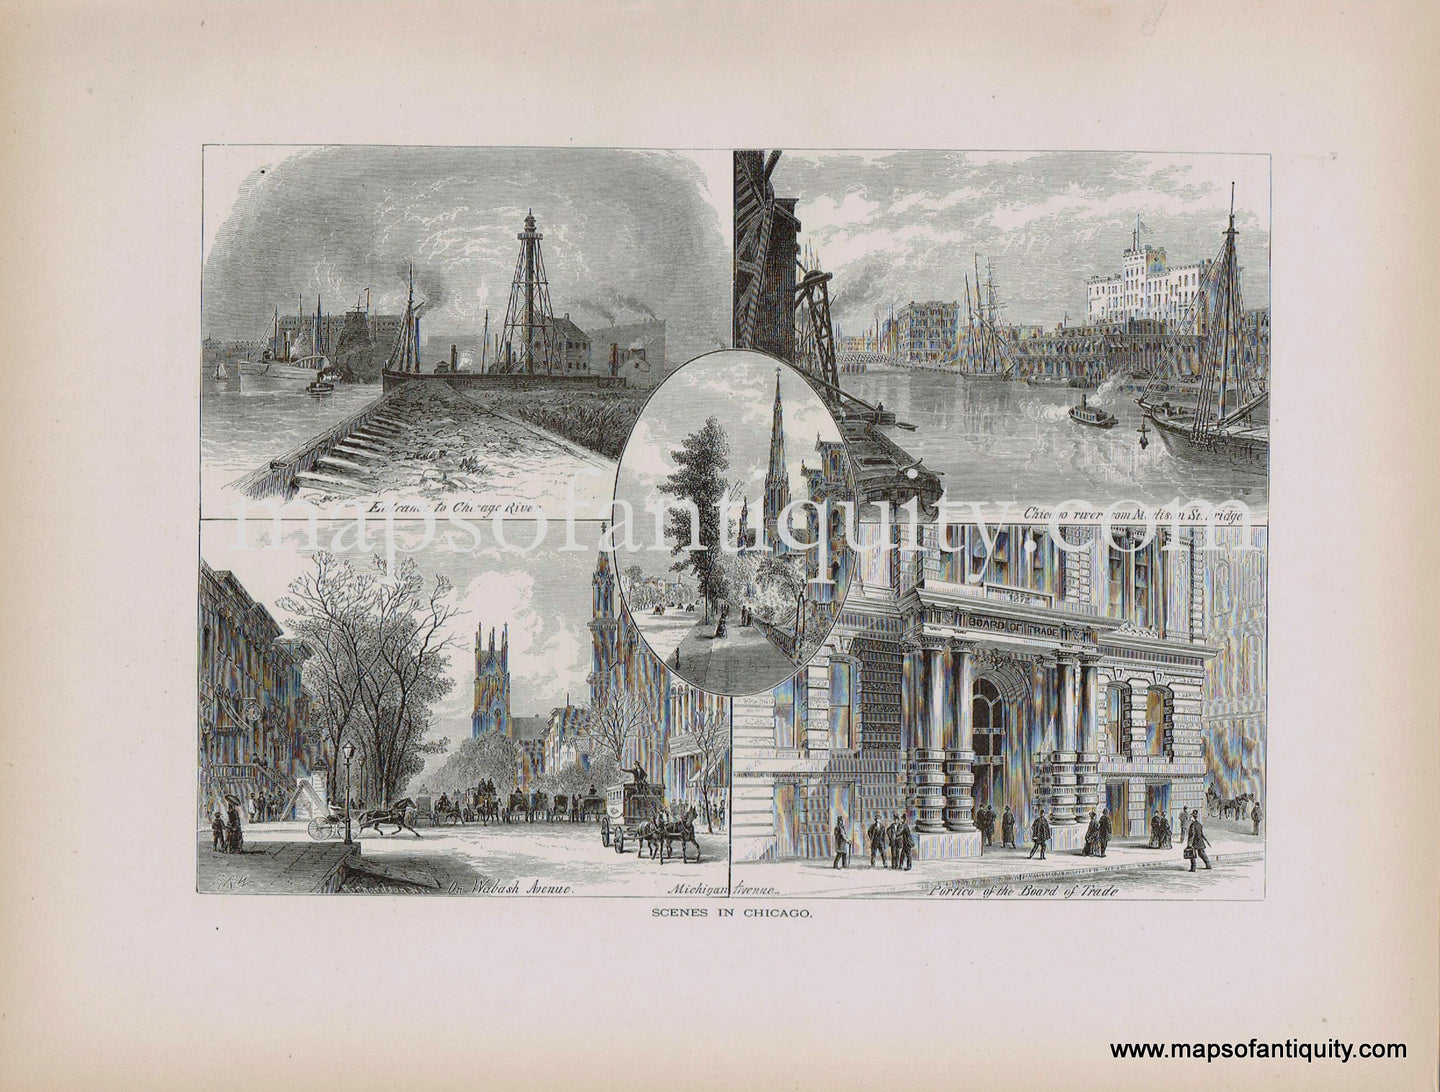 Antique-Print-Prints-Scenes-in-Chicago-1872-Picturesque-America-1800s-19th-century-maps-of-Antiquity